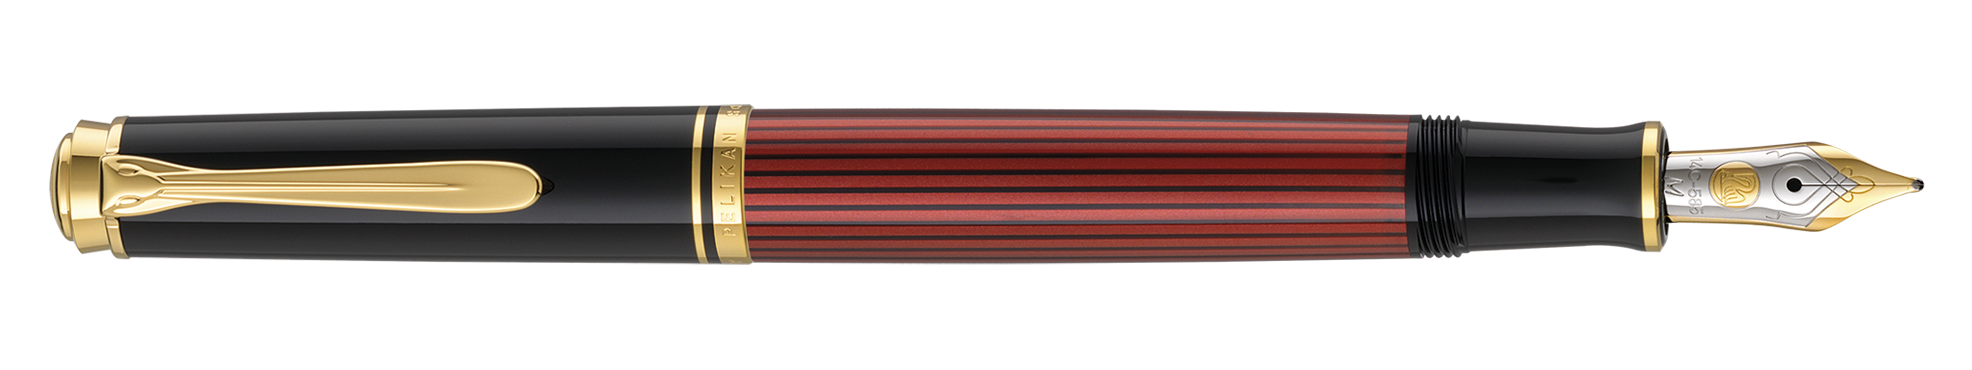 Souverän® 600 Schwarz-Rot